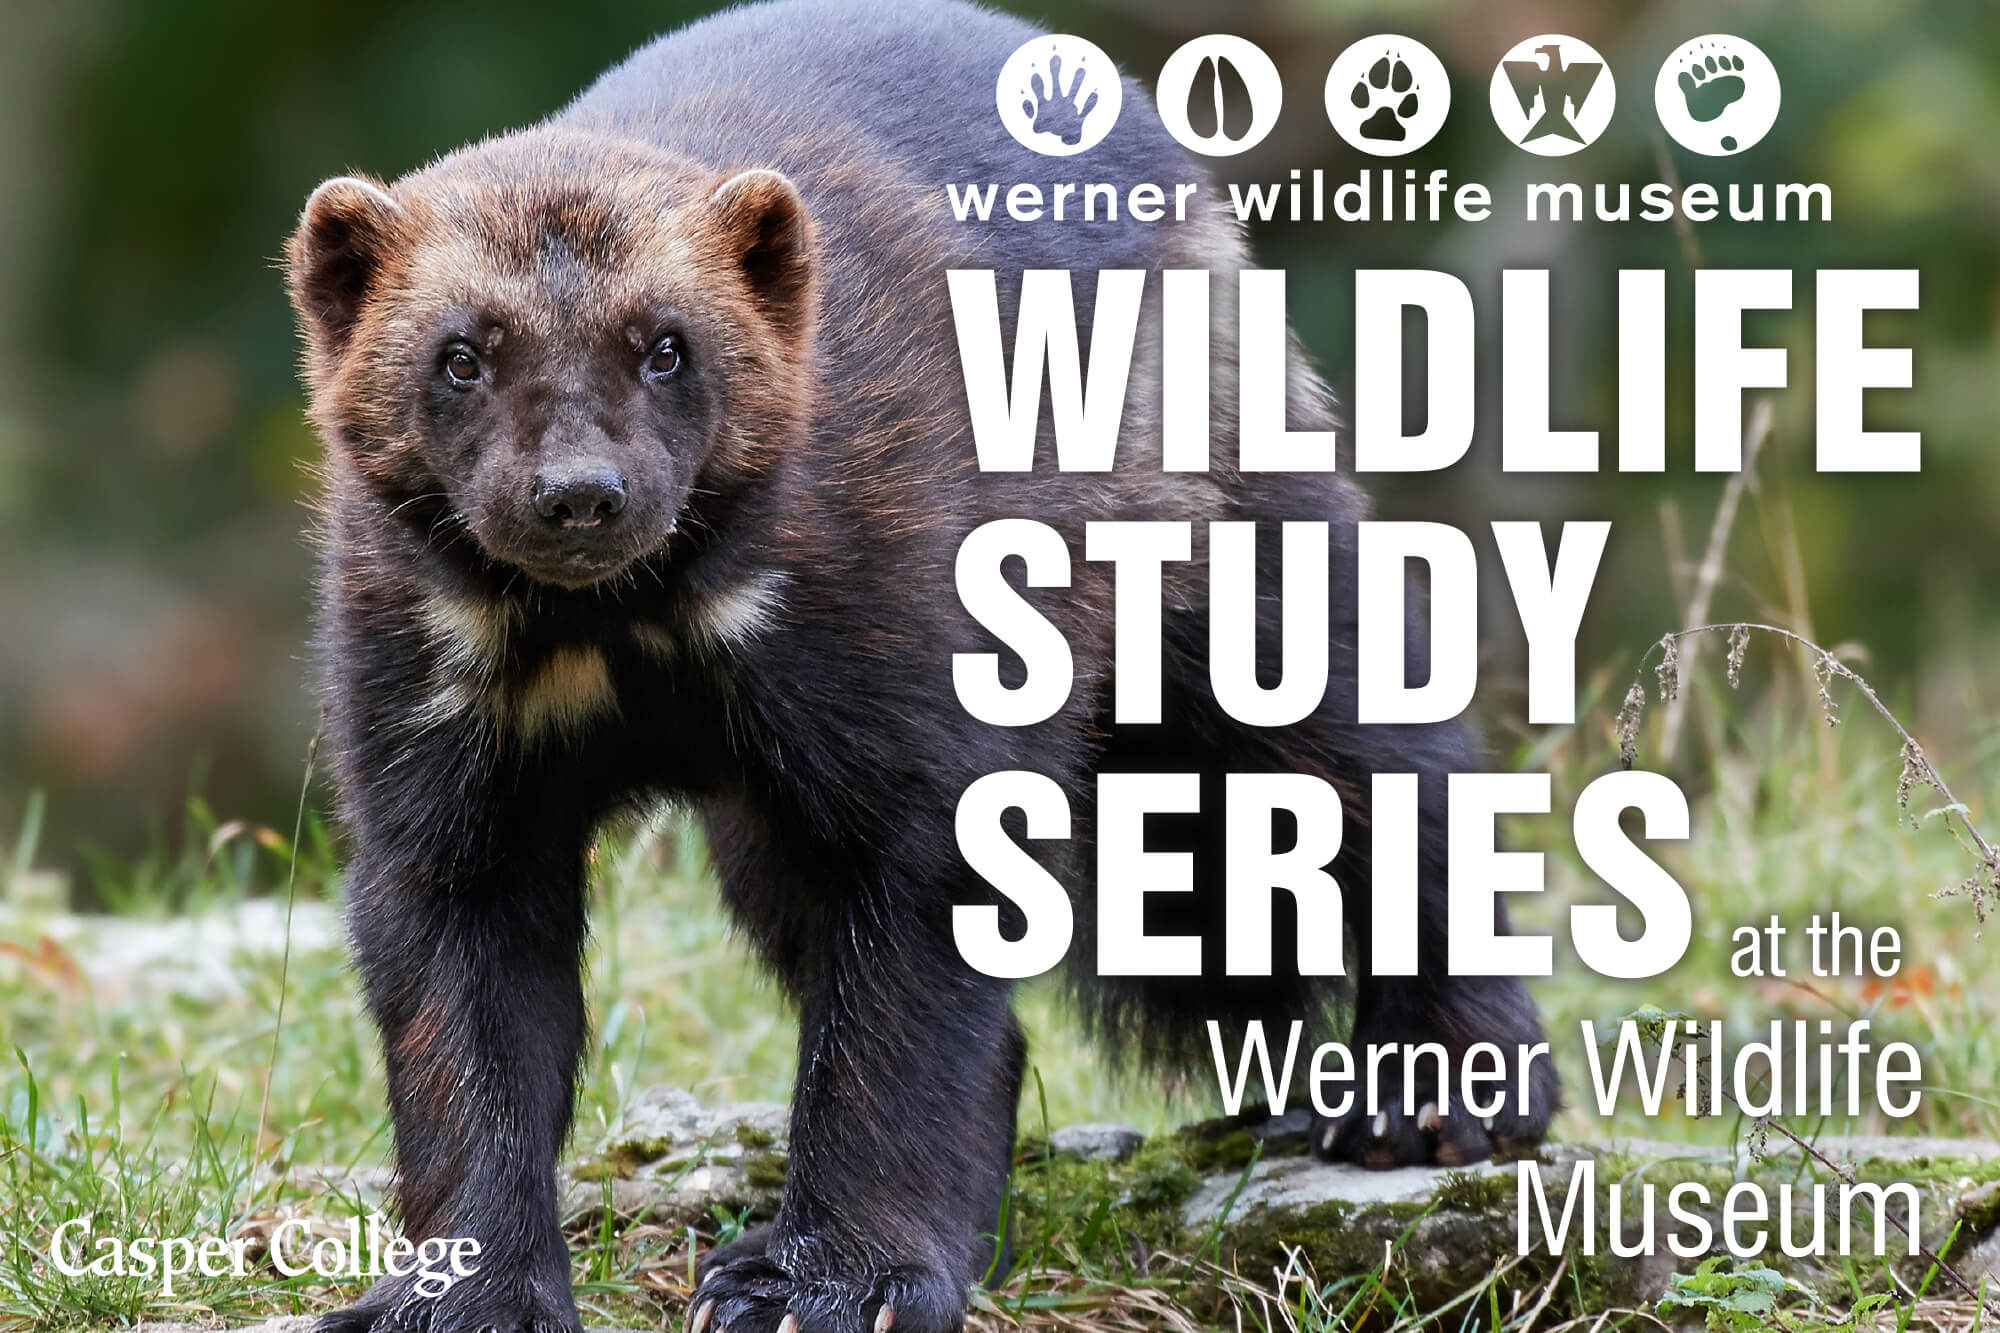 Image for spring 2023 Werner Wildlife Series events.